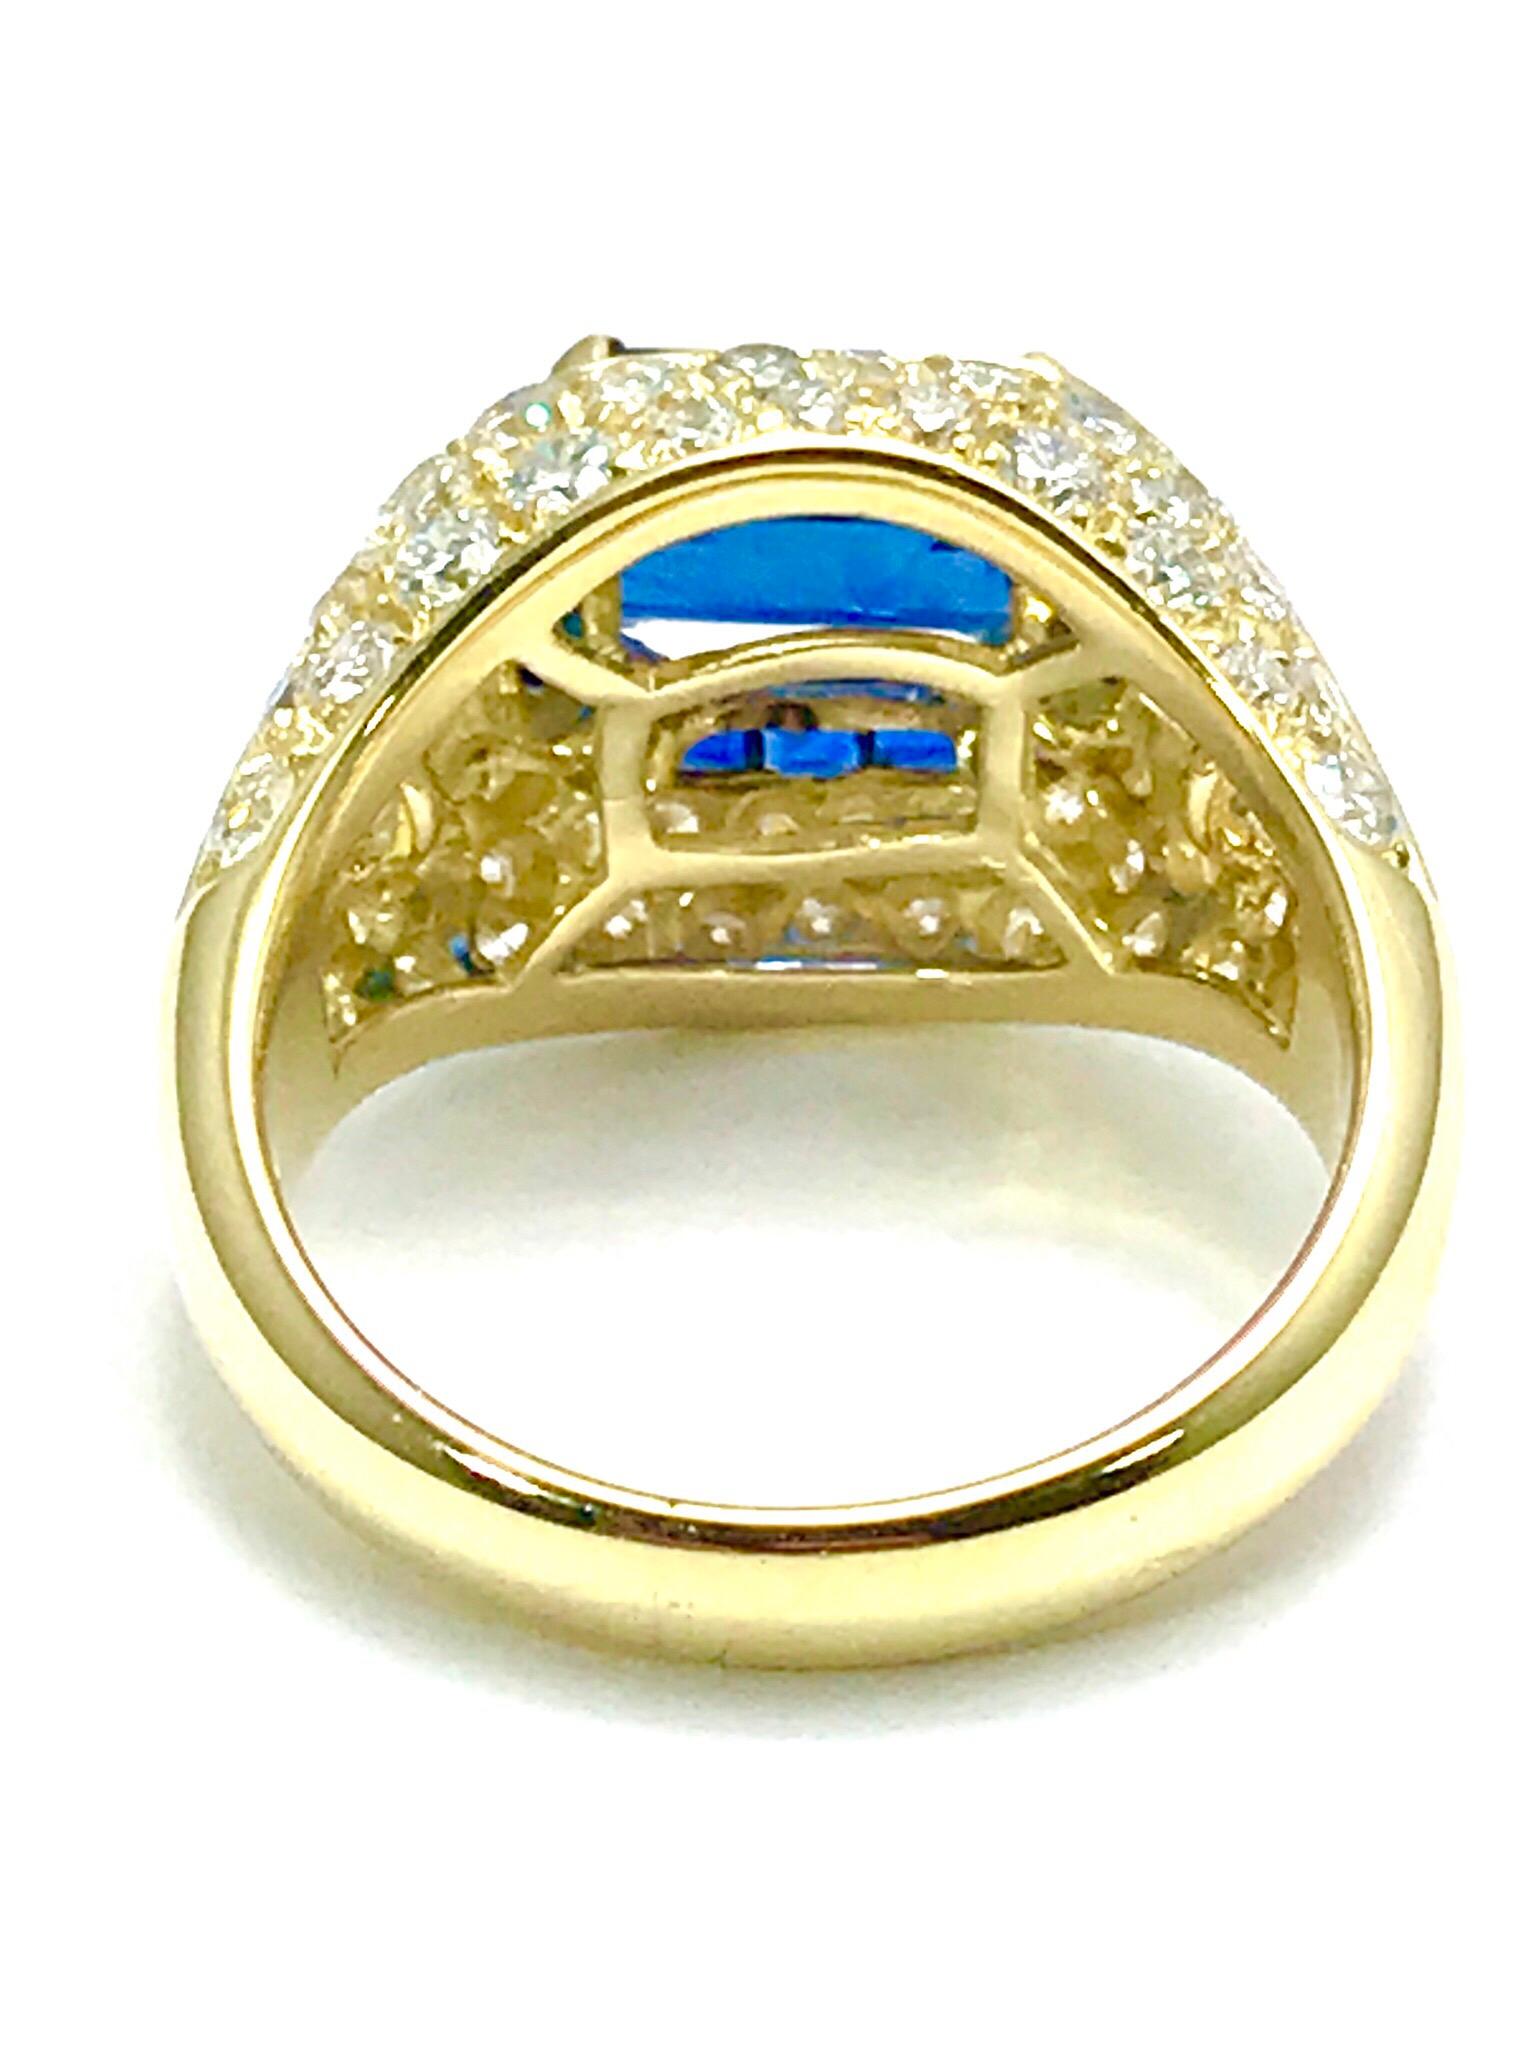 Picchiotti 2.48 Carat Emerald Cut Sapphire and Diamond Yellow Gold Ring 2